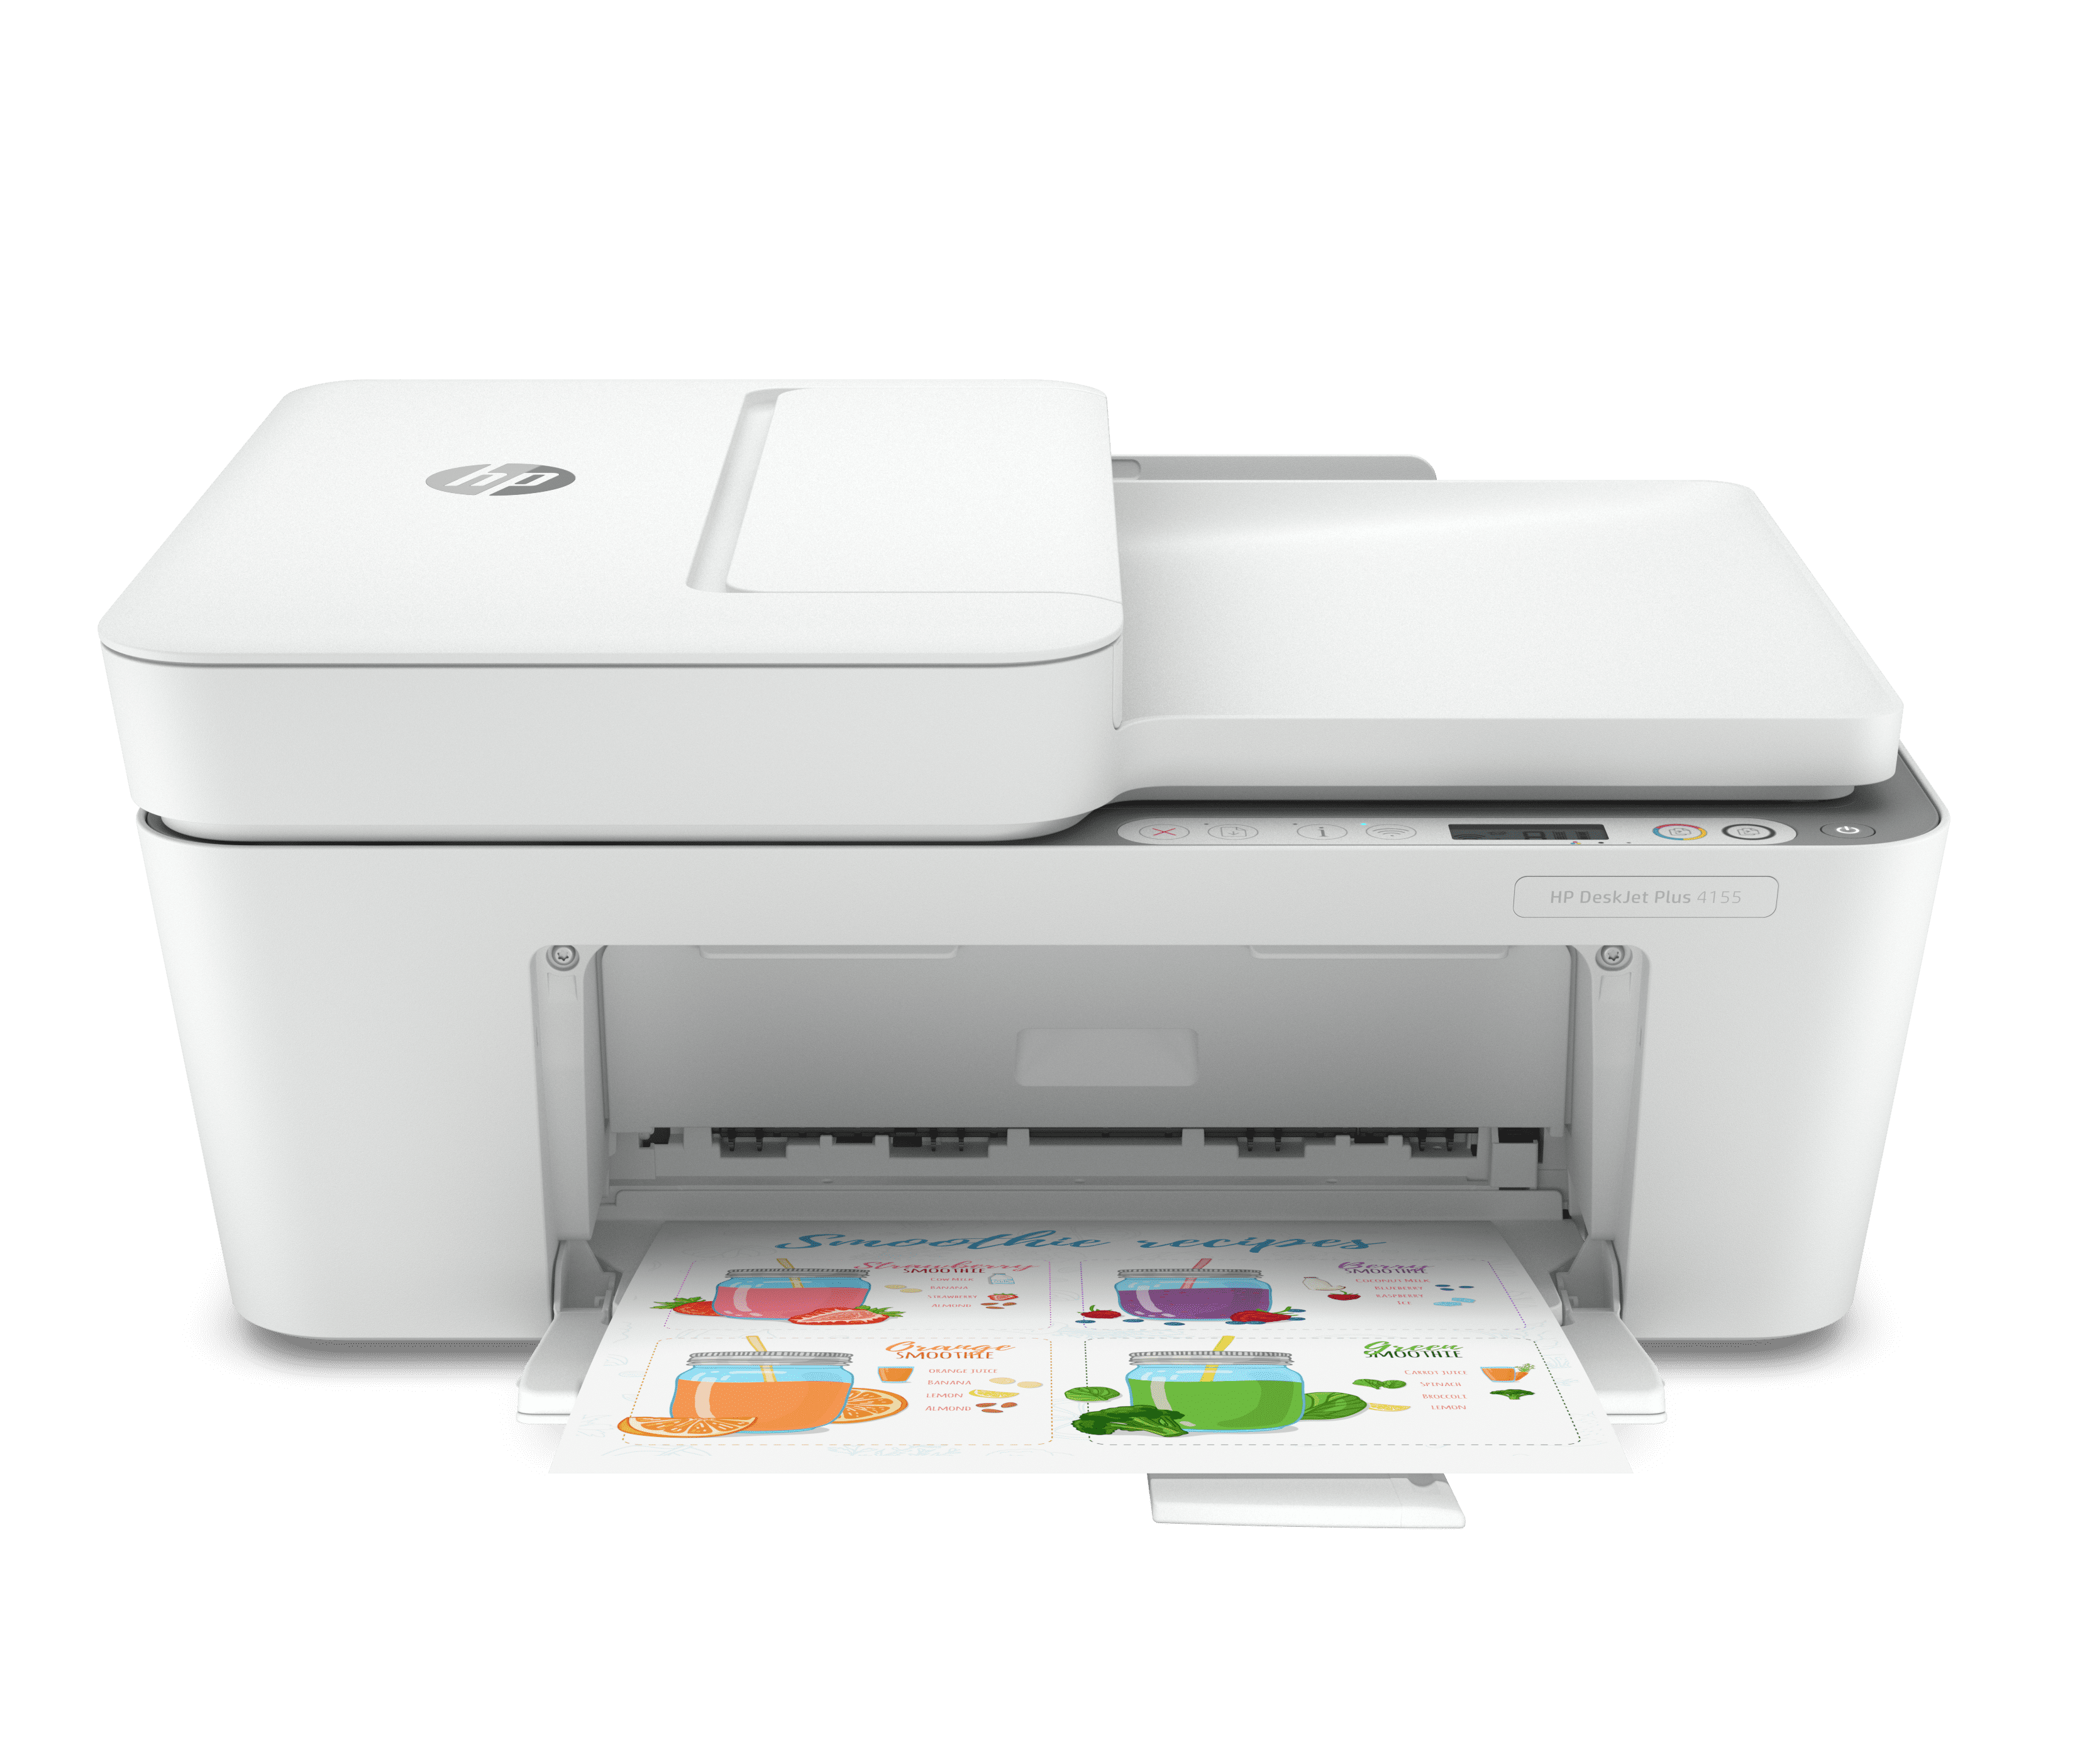 Hp Deskjet Plus 4155 Wireless All In One Color Inkjet Printer Instant